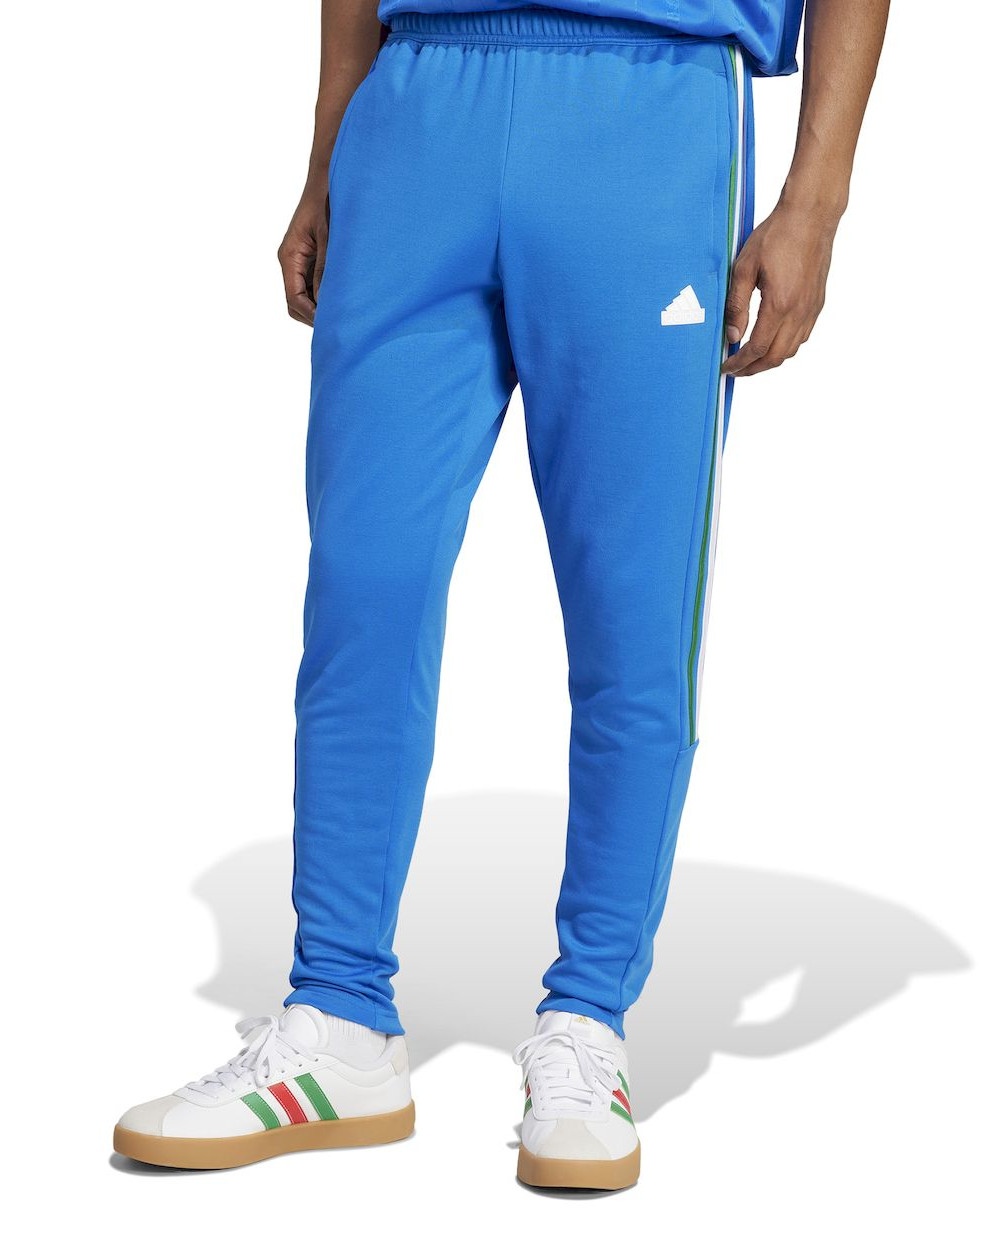  Pantaloni tuta Pants UOMO Adidas House of Tiro Nations Pack Blu con tasche